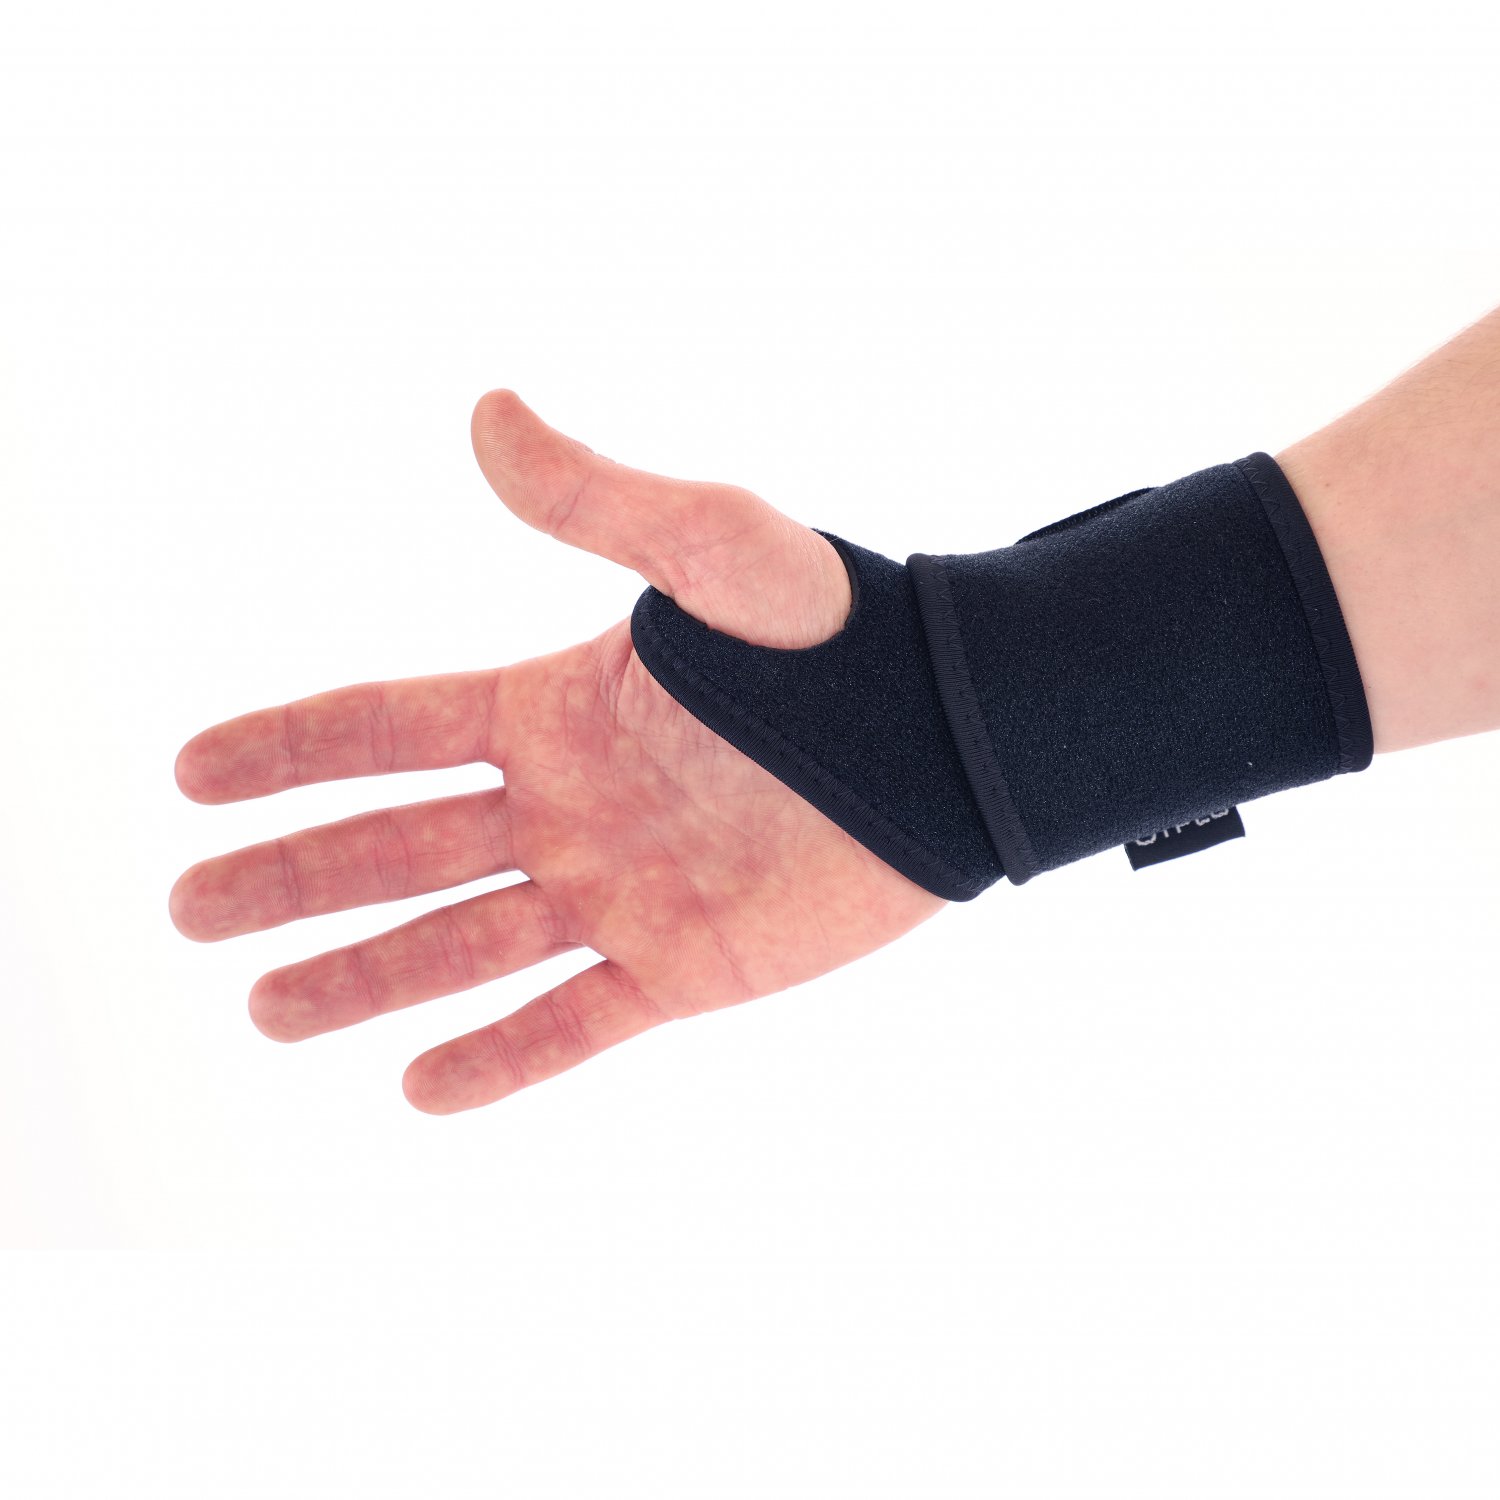 Black Neoprene Adjustable Pain Relief Wrist Support Strap